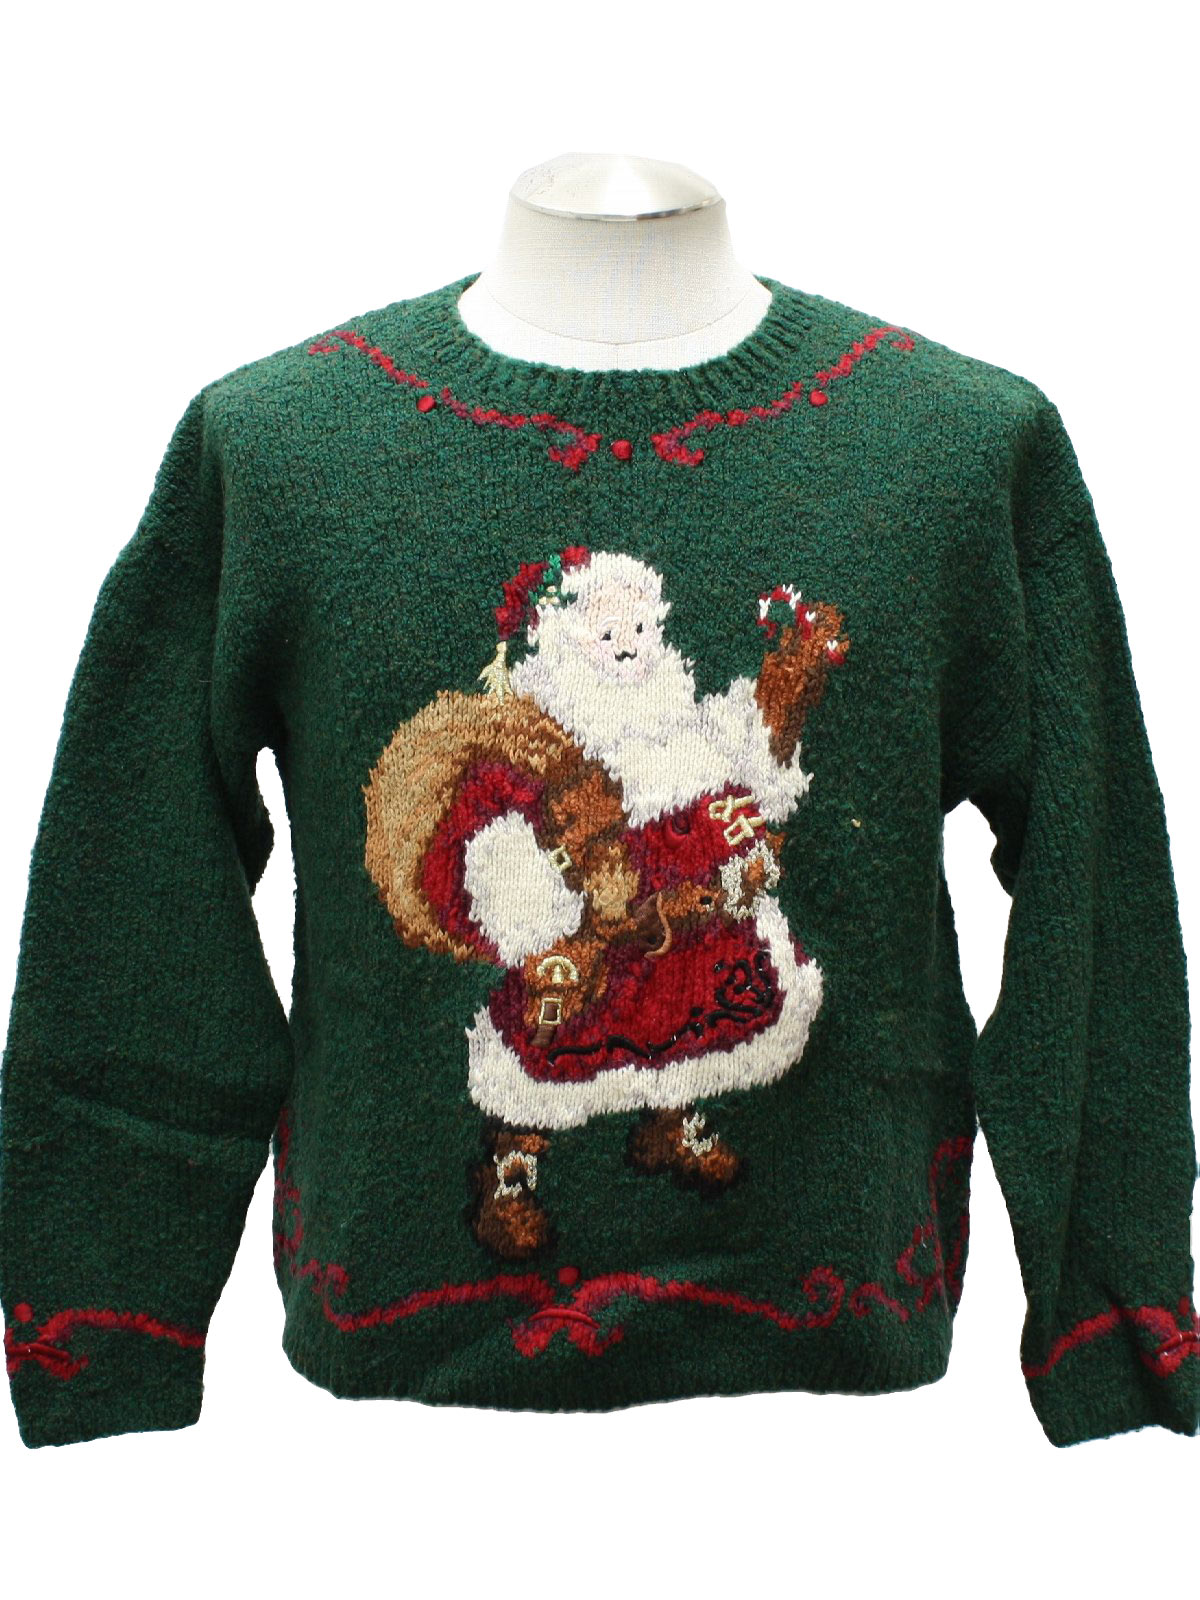 Womens Ugly Christmas Sweater: 80s Style -Talbots Petites- Womens dark ...